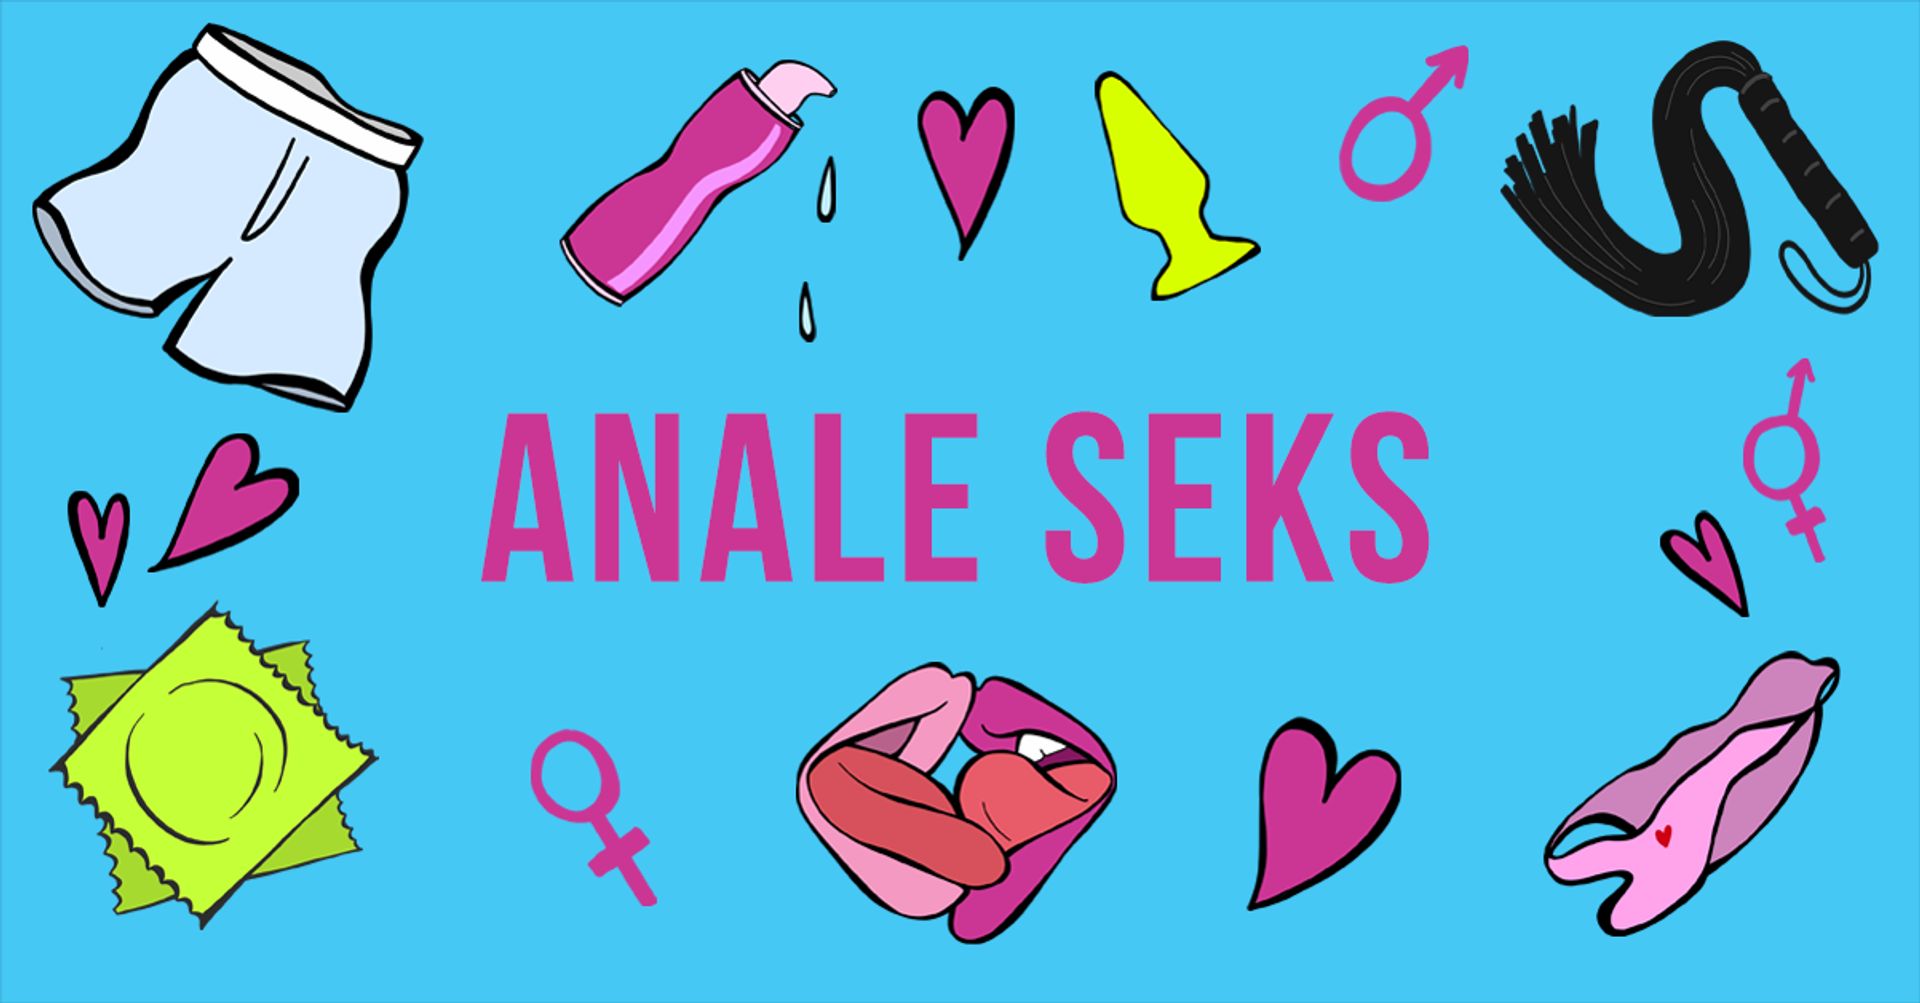 Anale seks - Seks and Drugs woordenboek - Spuiten en Slikken